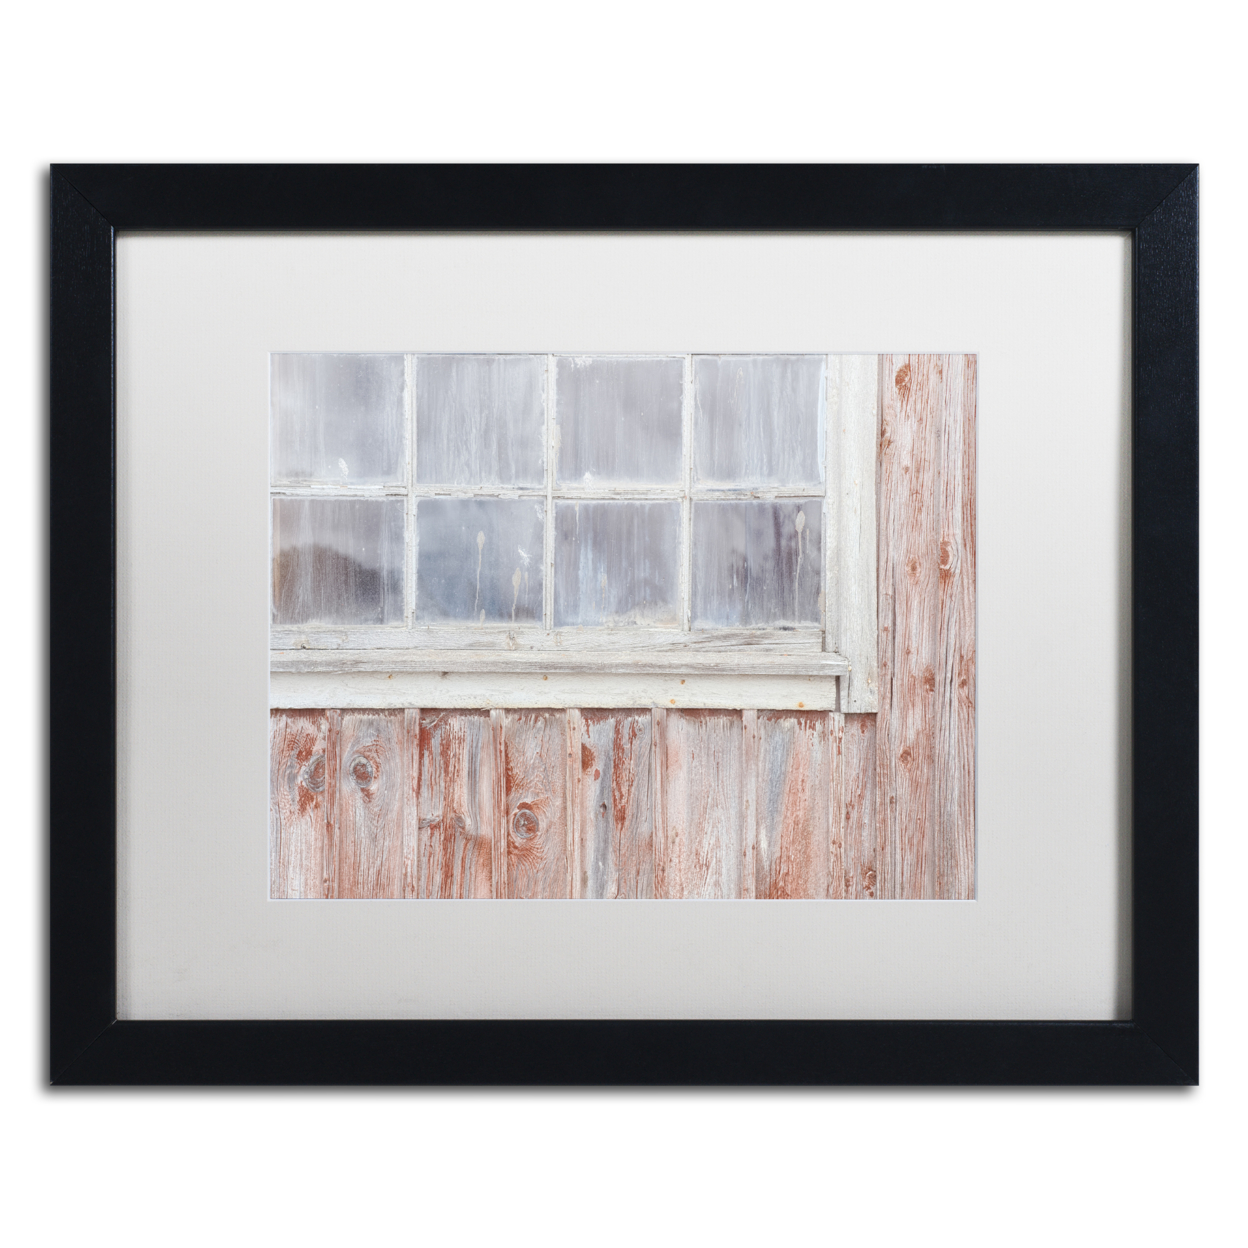 Cora Niele 'Little Windows II' Black Wooden Framed Art 18 X 22 Inches